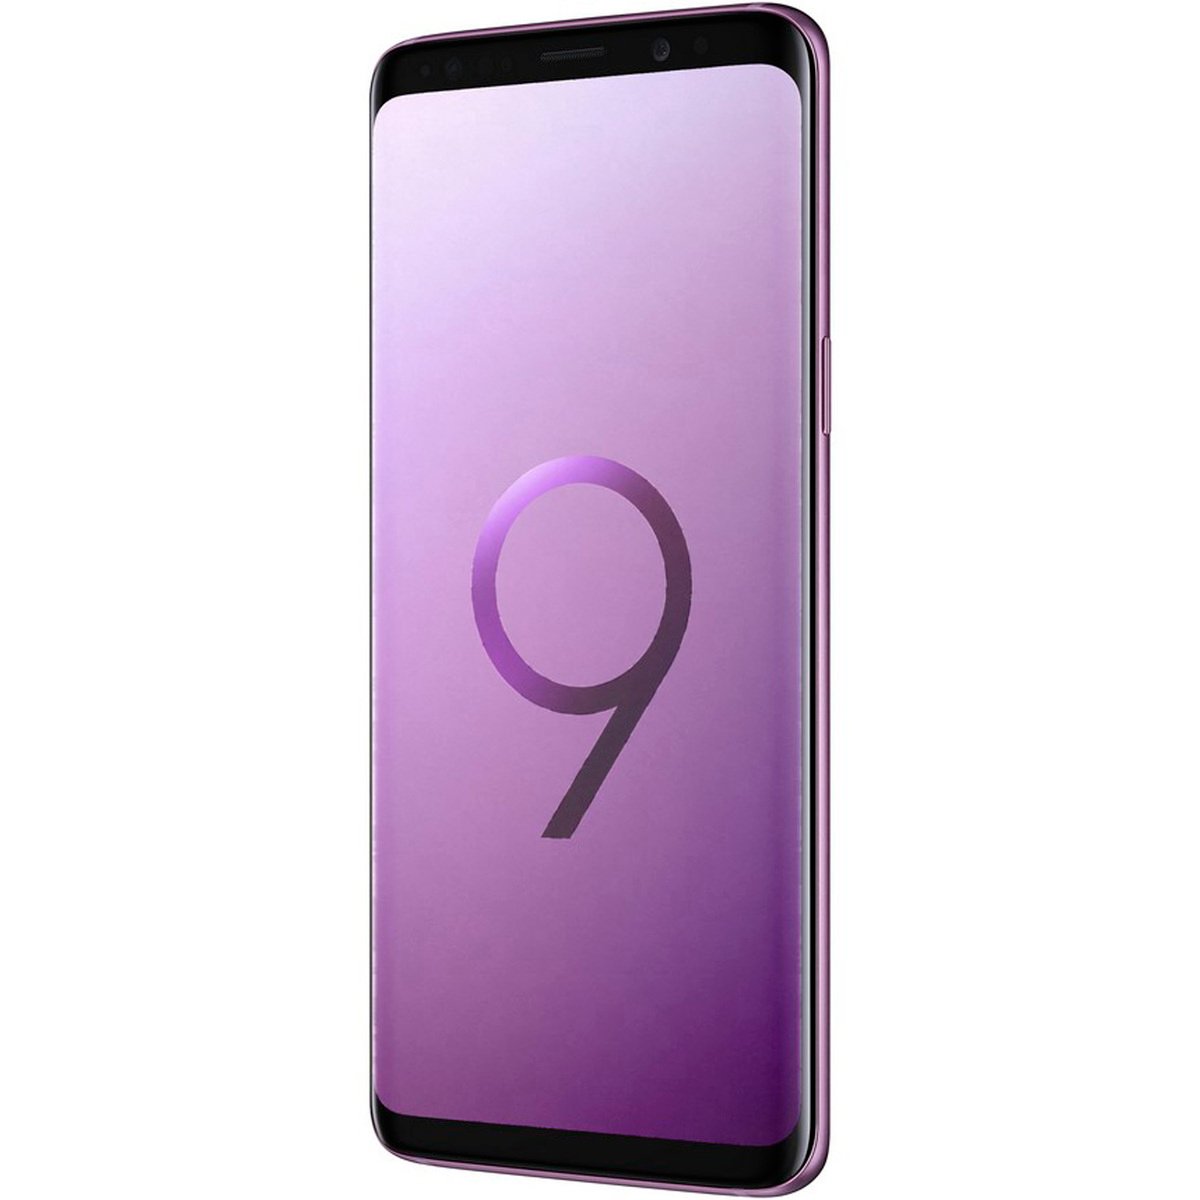 Samsung Galaxy S9 SM-G960FZKDXSG 64 GB Lilac Purple